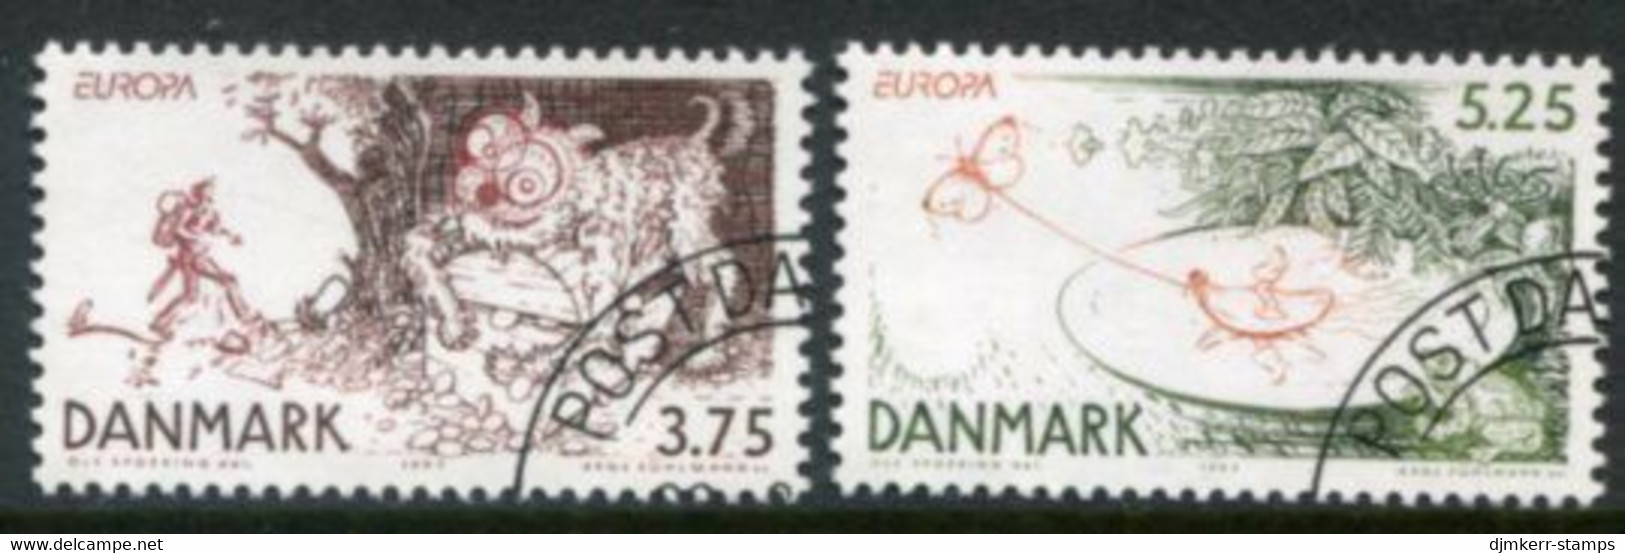 DENMARK 1997 Europa: Sagas And Legends Used.  Michel 1162-63 - Usado